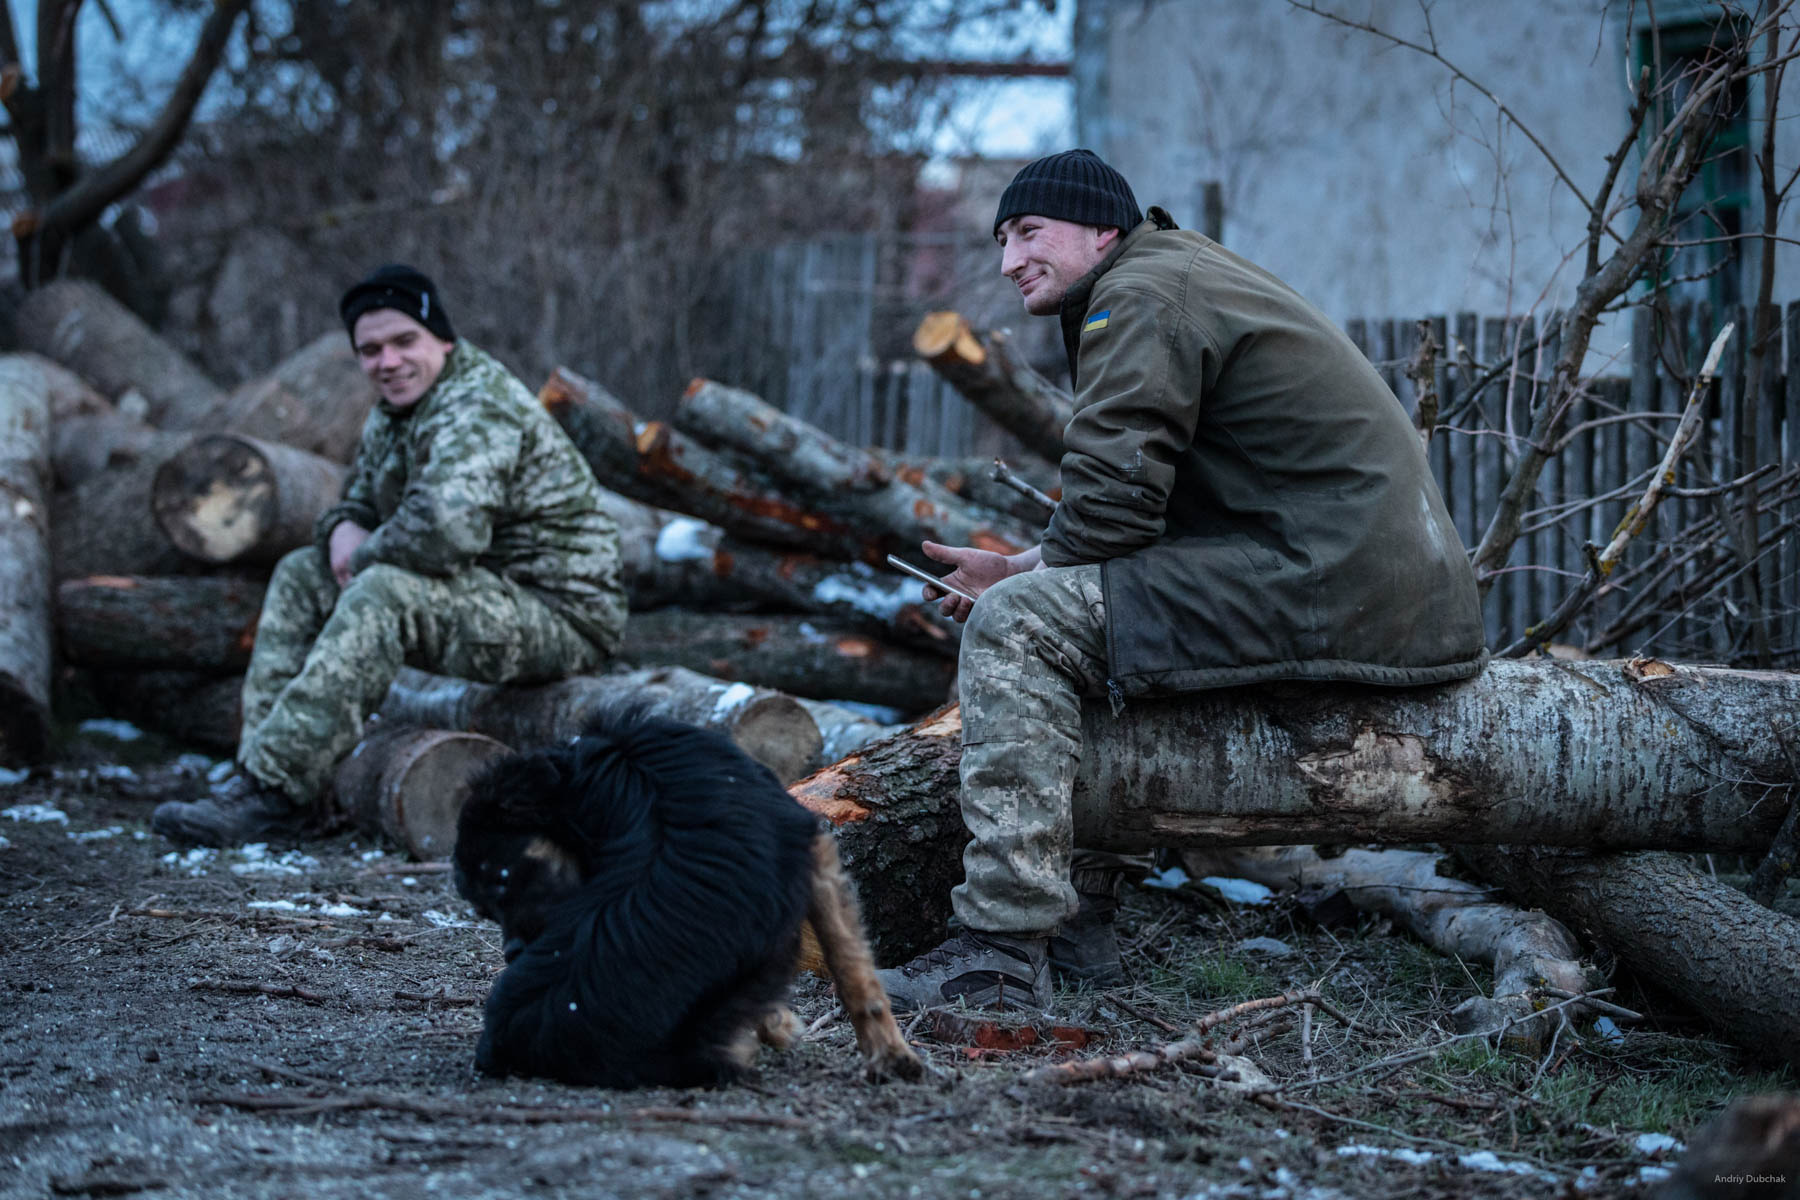 Driver, Vasily, and sailor, Dmitry, rest after harvesting firewood. Shirokine, March 2018.